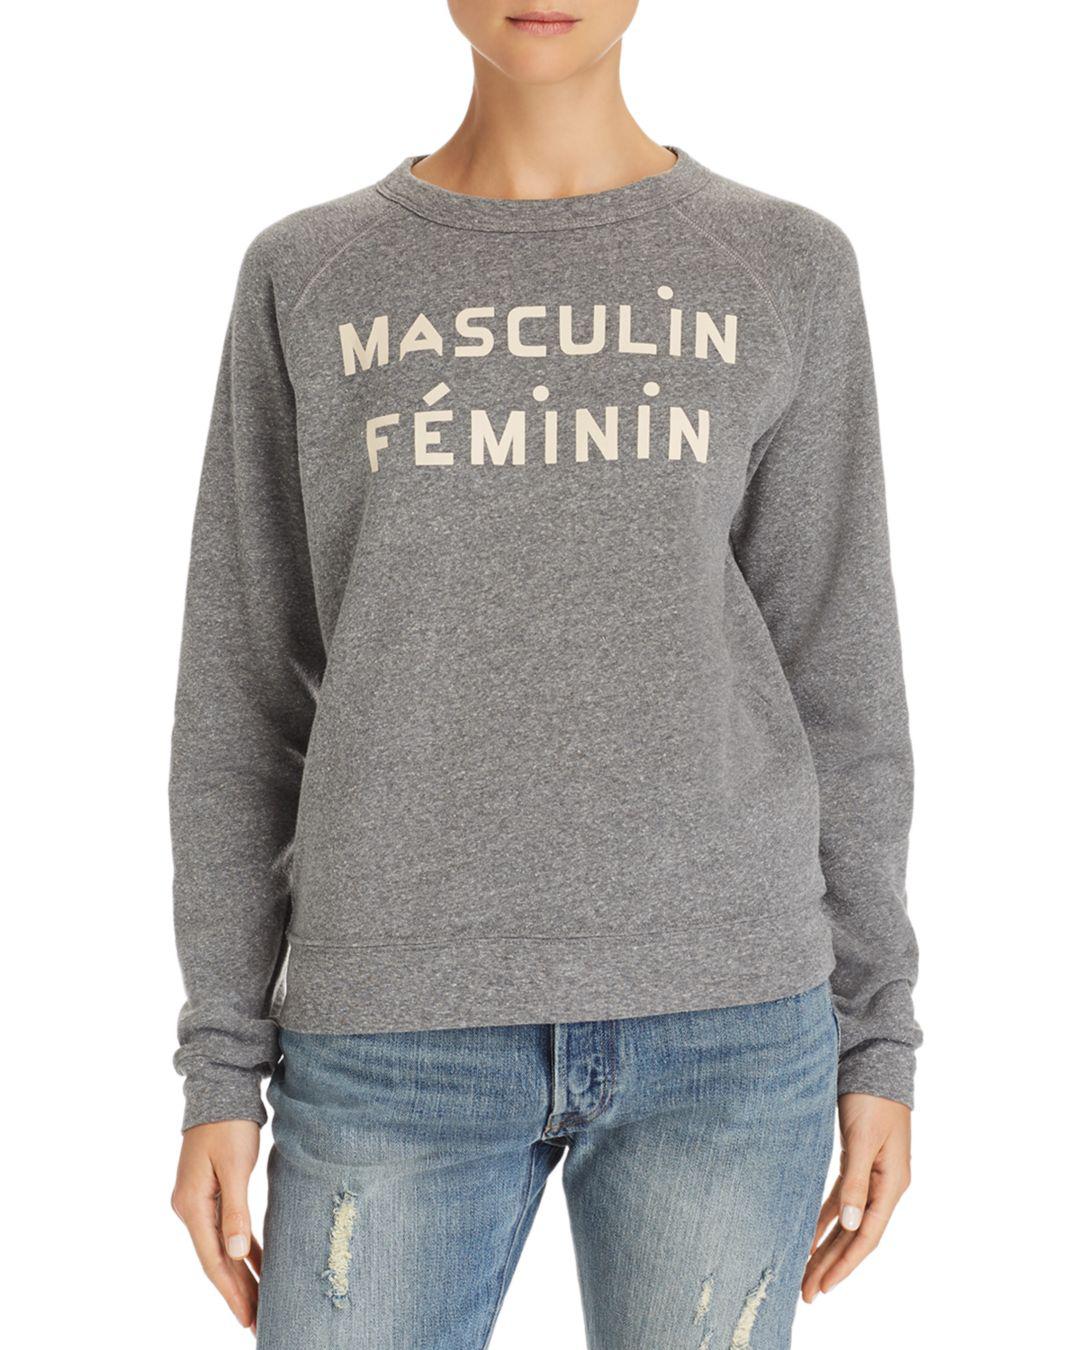 Clare V. Masculin Feminin Sweatshirt in Gray/Cream (Gray) - Lyst